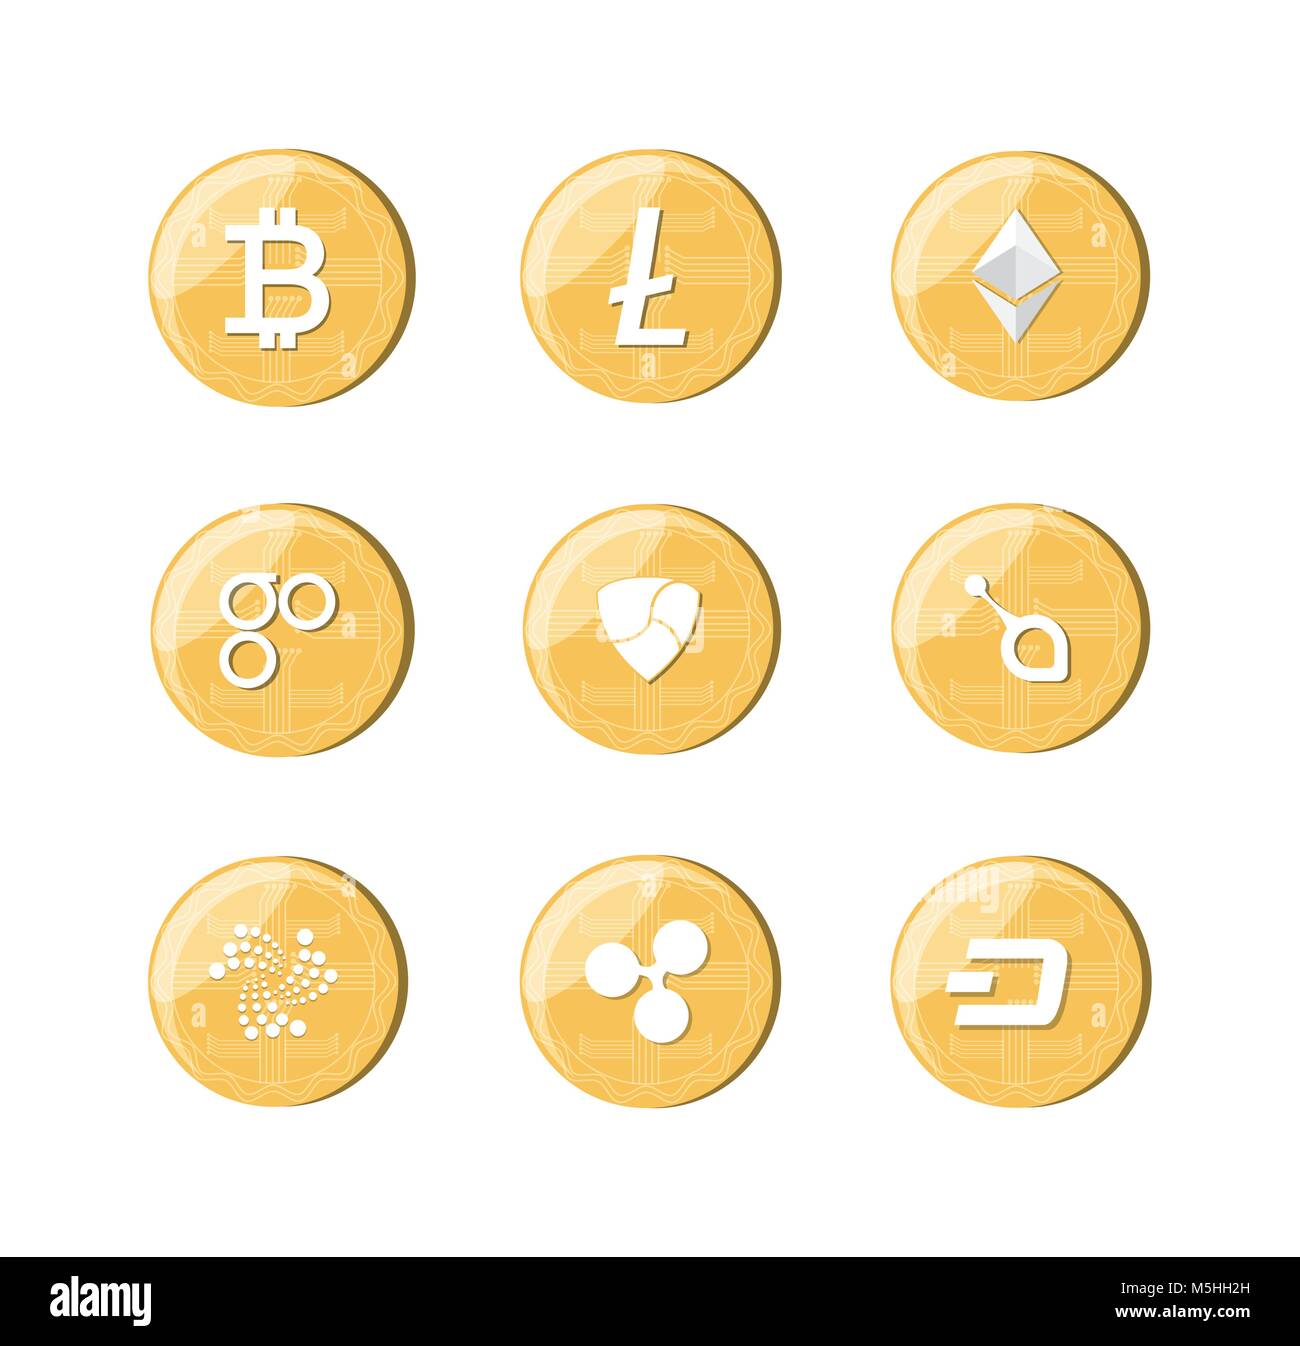 bitcoin games telegram